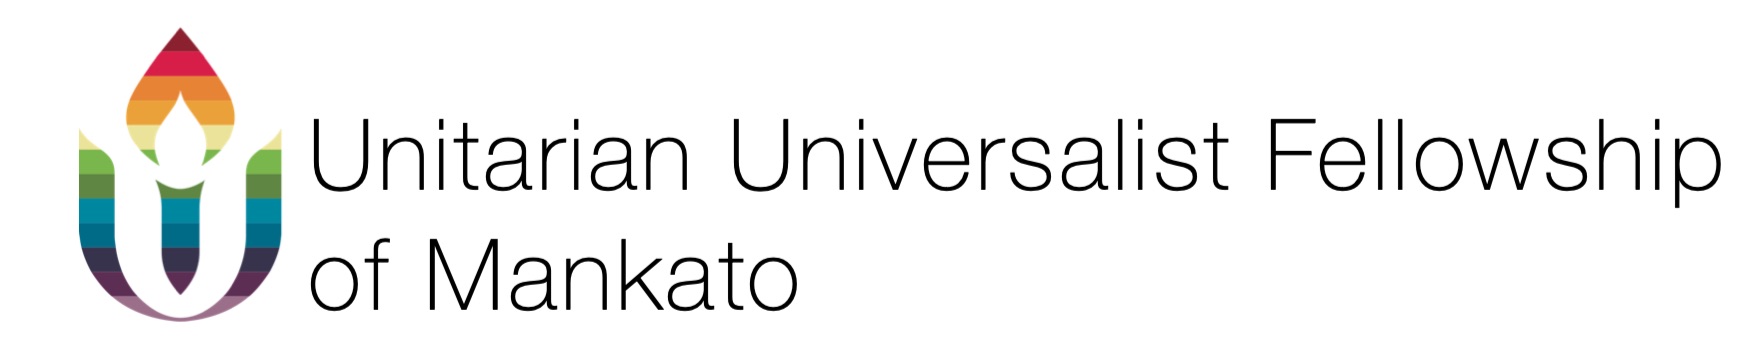 Unitarian Universalist Fellowship of Mankato